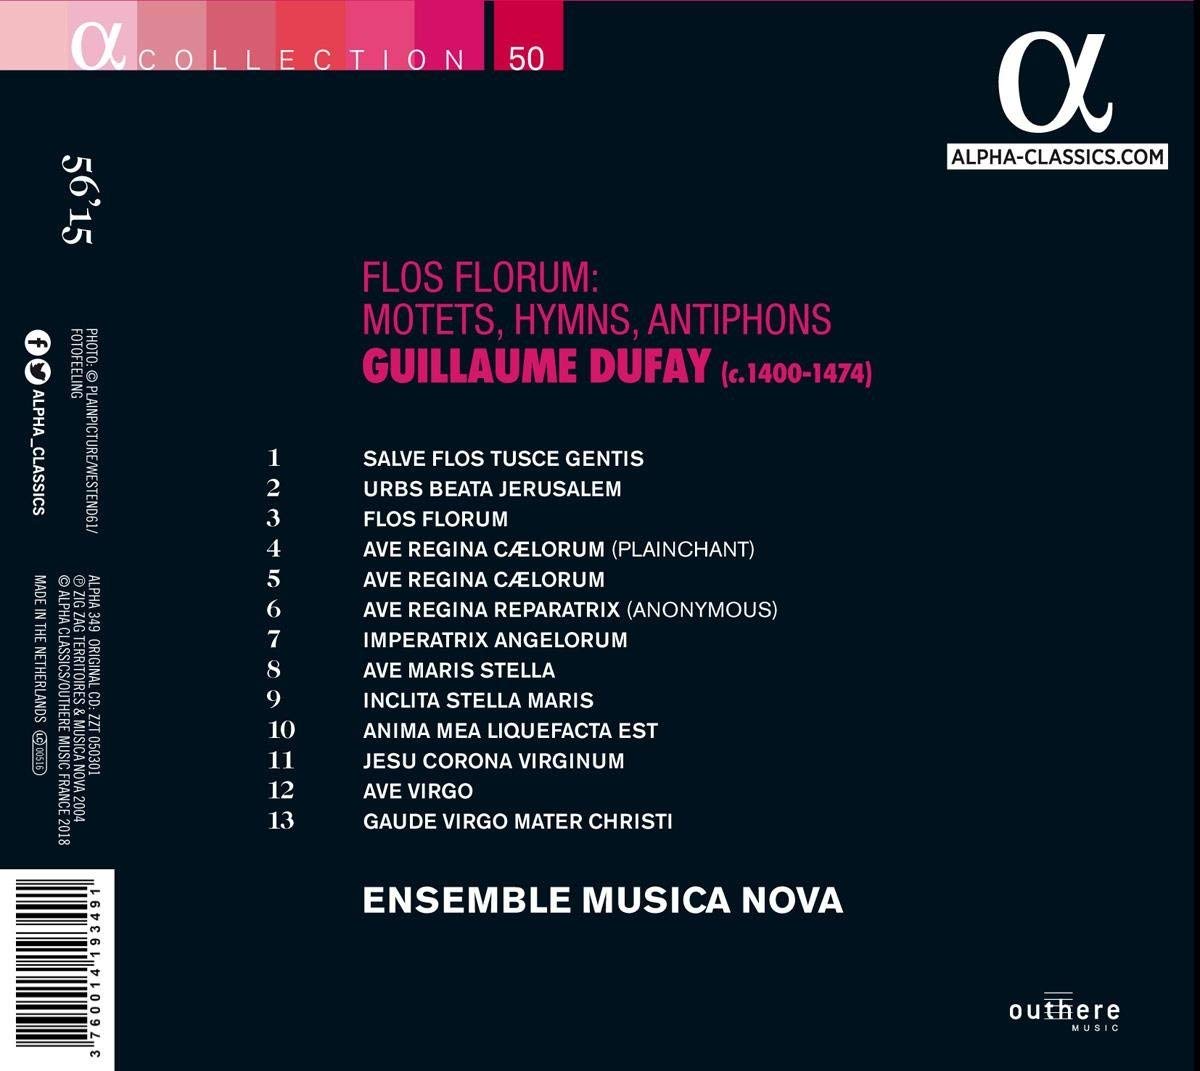 Ensemble Musica Nova 뒤파이: '꽃중의 꽃' - 성모 마리아를 위한 찬가 (Dufay: 'Flos Florum' -  Motets, Hymns, Antiphons) 앙상블 무지카 노바